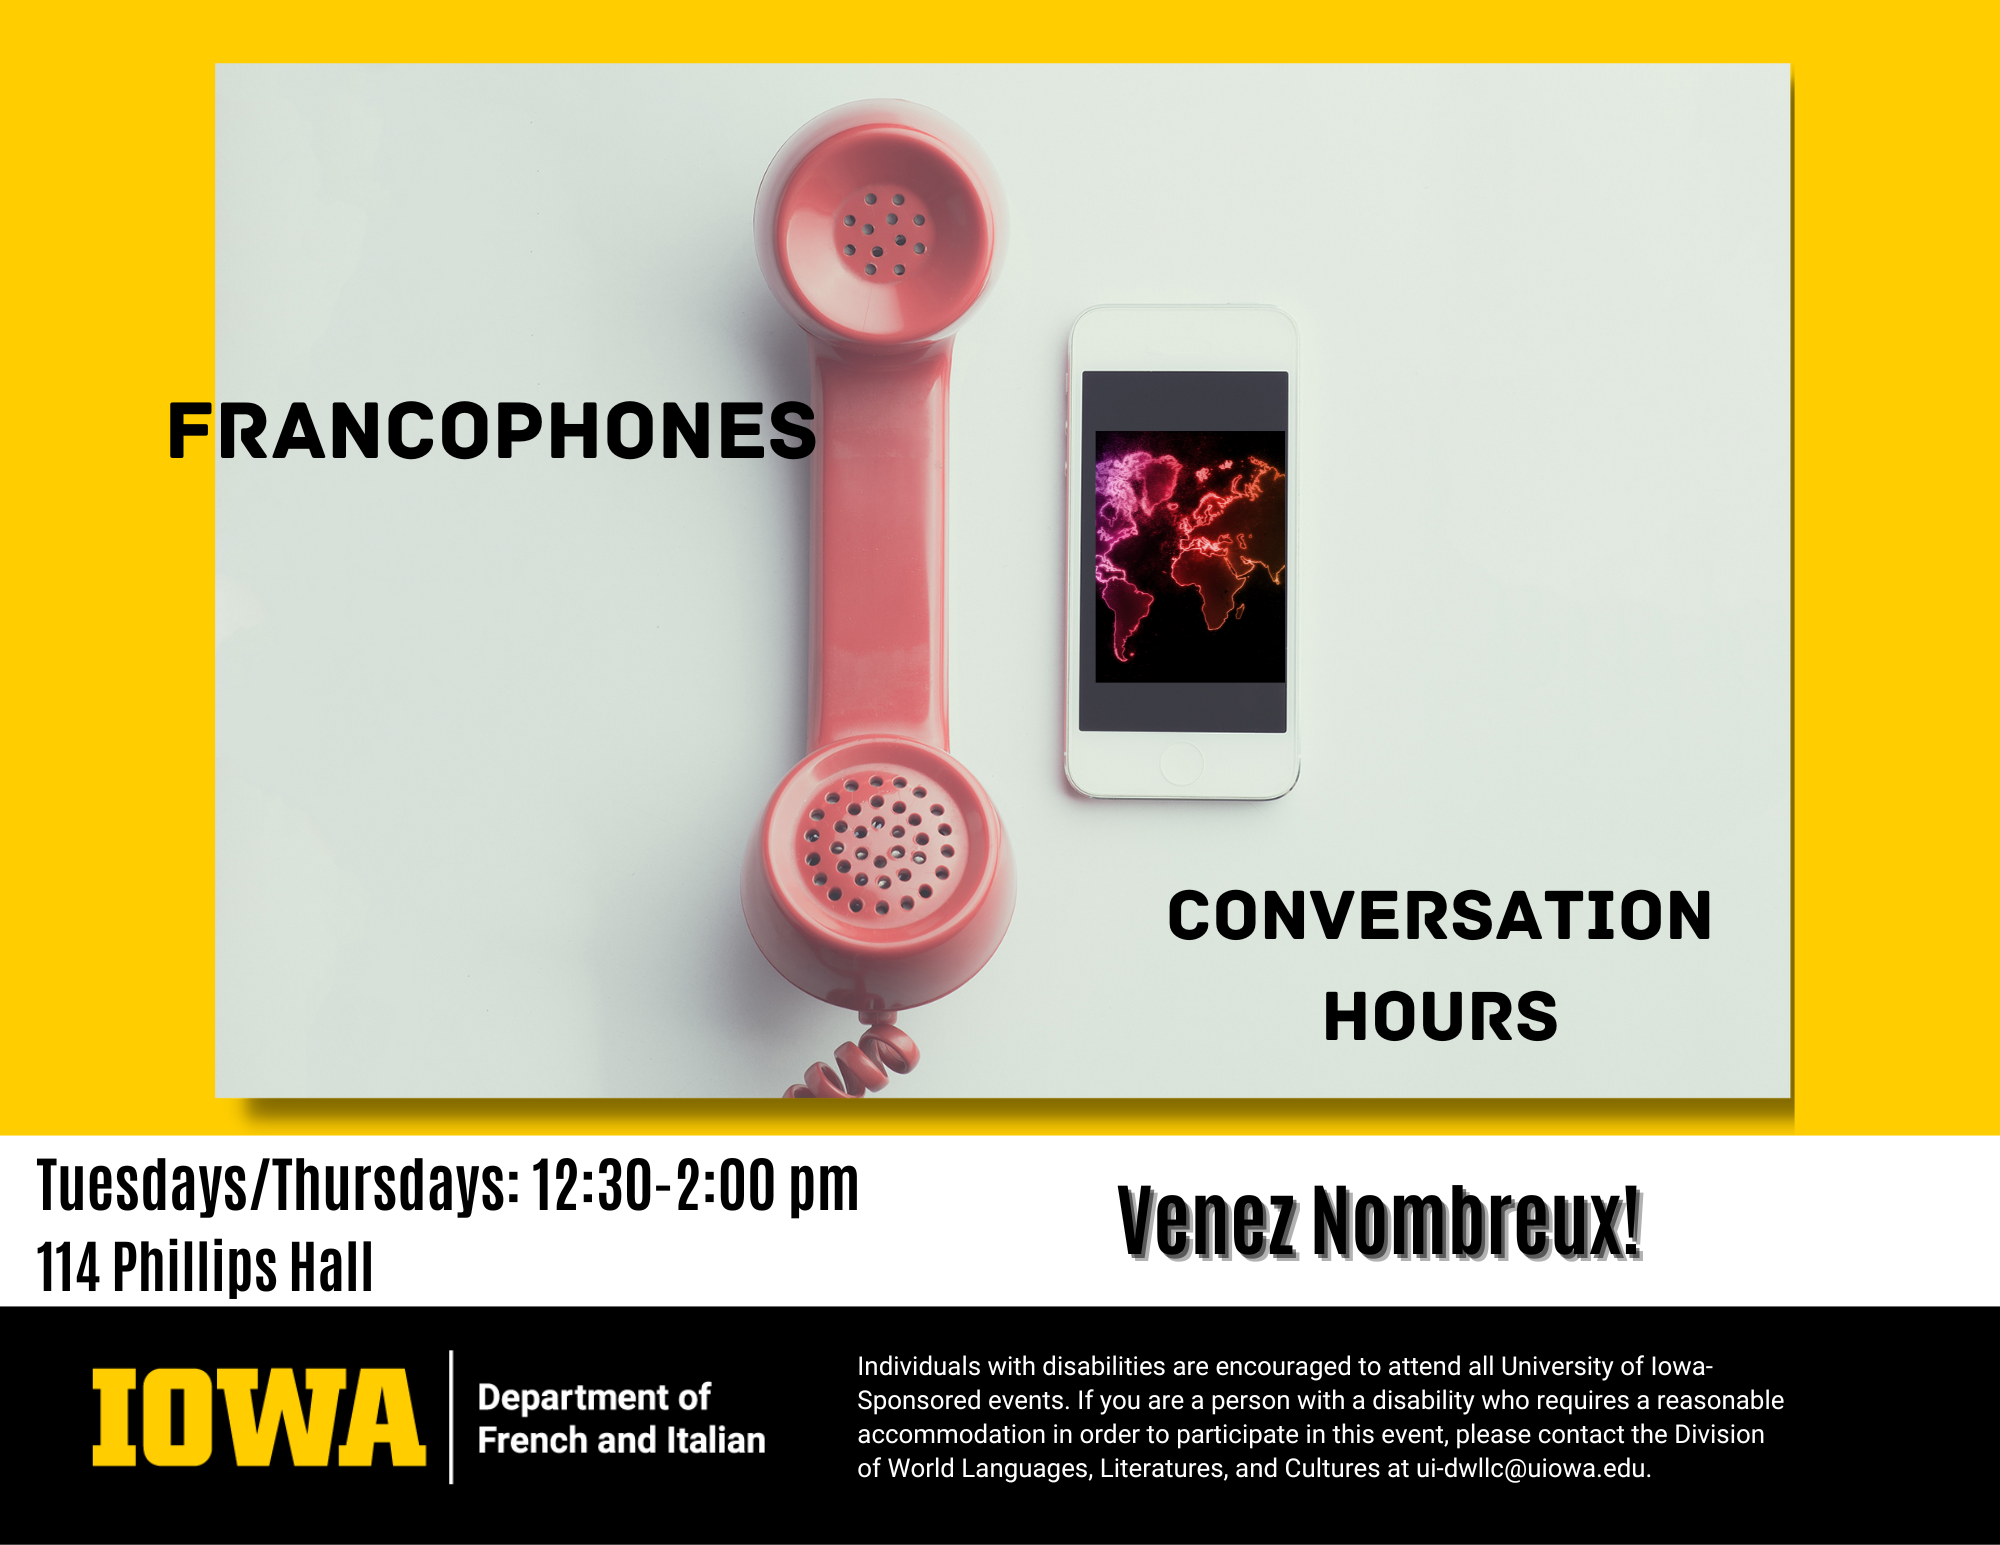 Francophone Conversation Hour; Tuesdays/Thursdays from 12:30 pm to 2:00 pm